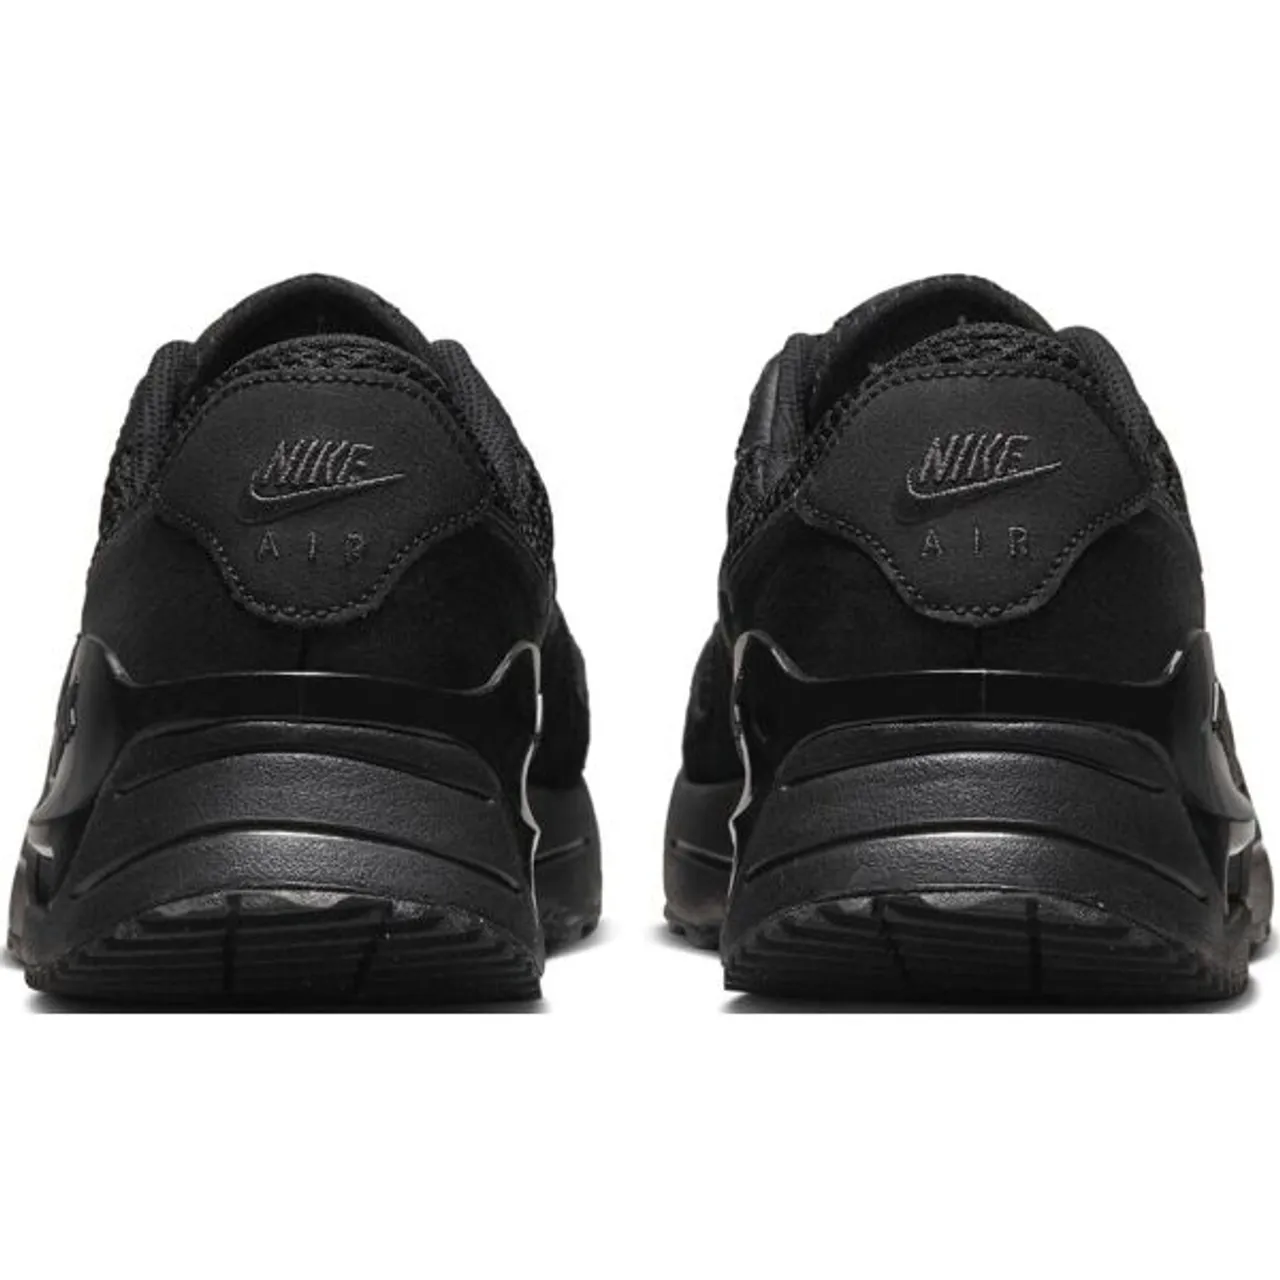 Sneaker NIKE SPORTSWEAR "AIR MAX SYSTM" Gr. 45, schwarz (black, anthracite, black) Schuhe Stoffschuhe